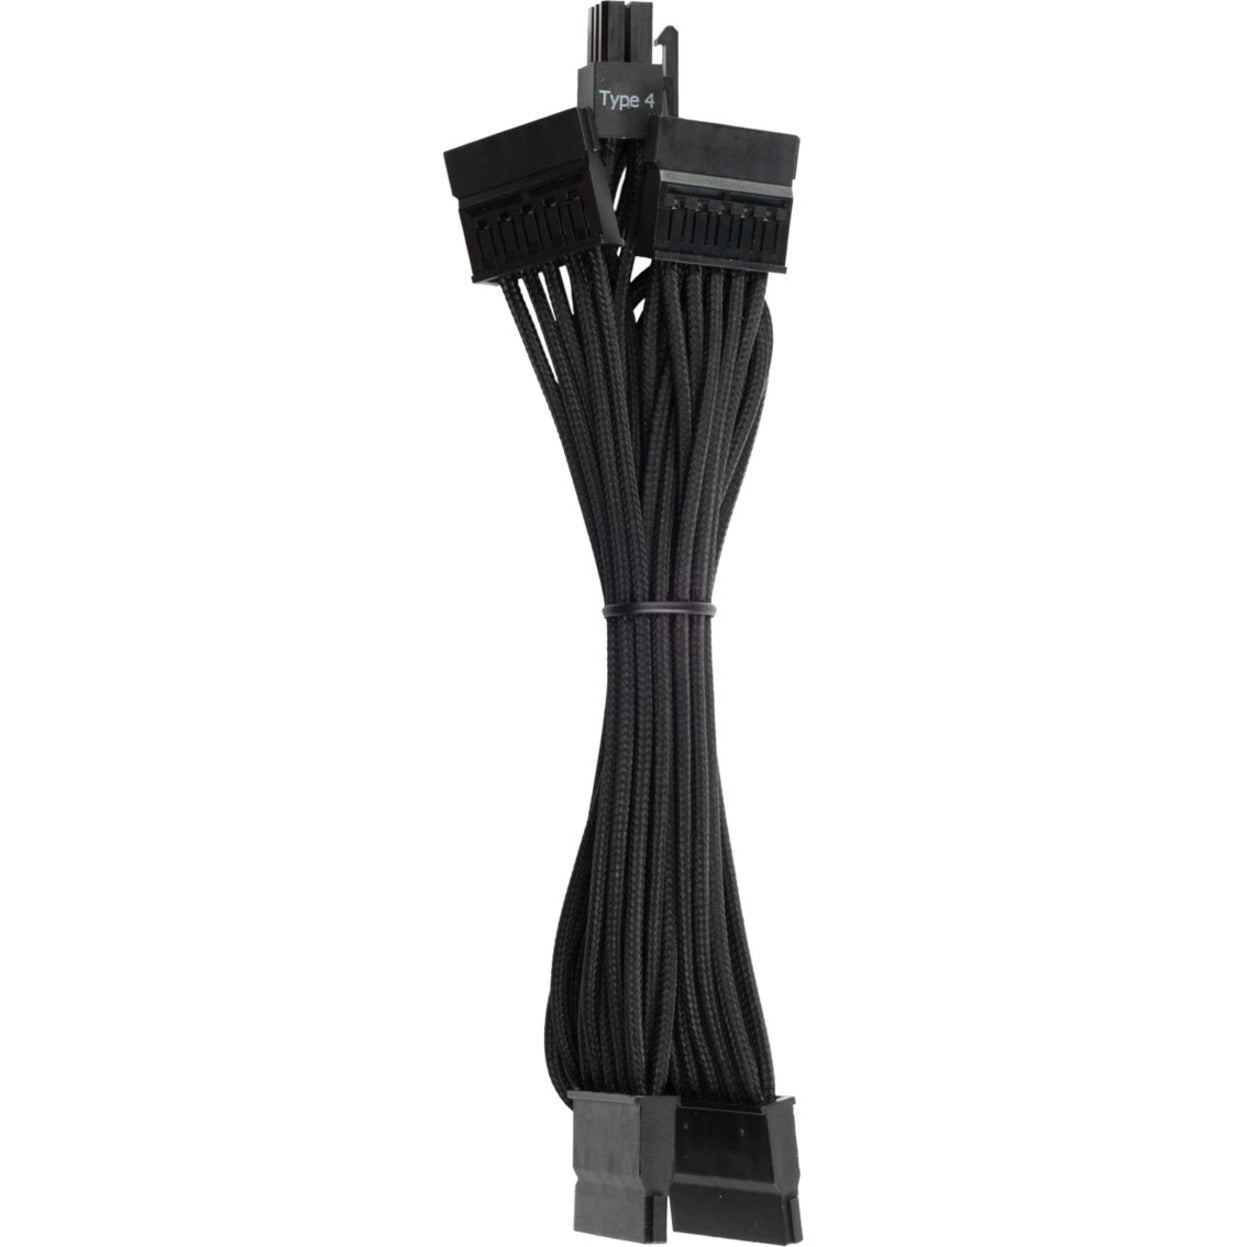 Premium Individually Sleeved PSU Cables Pro Kit - Black